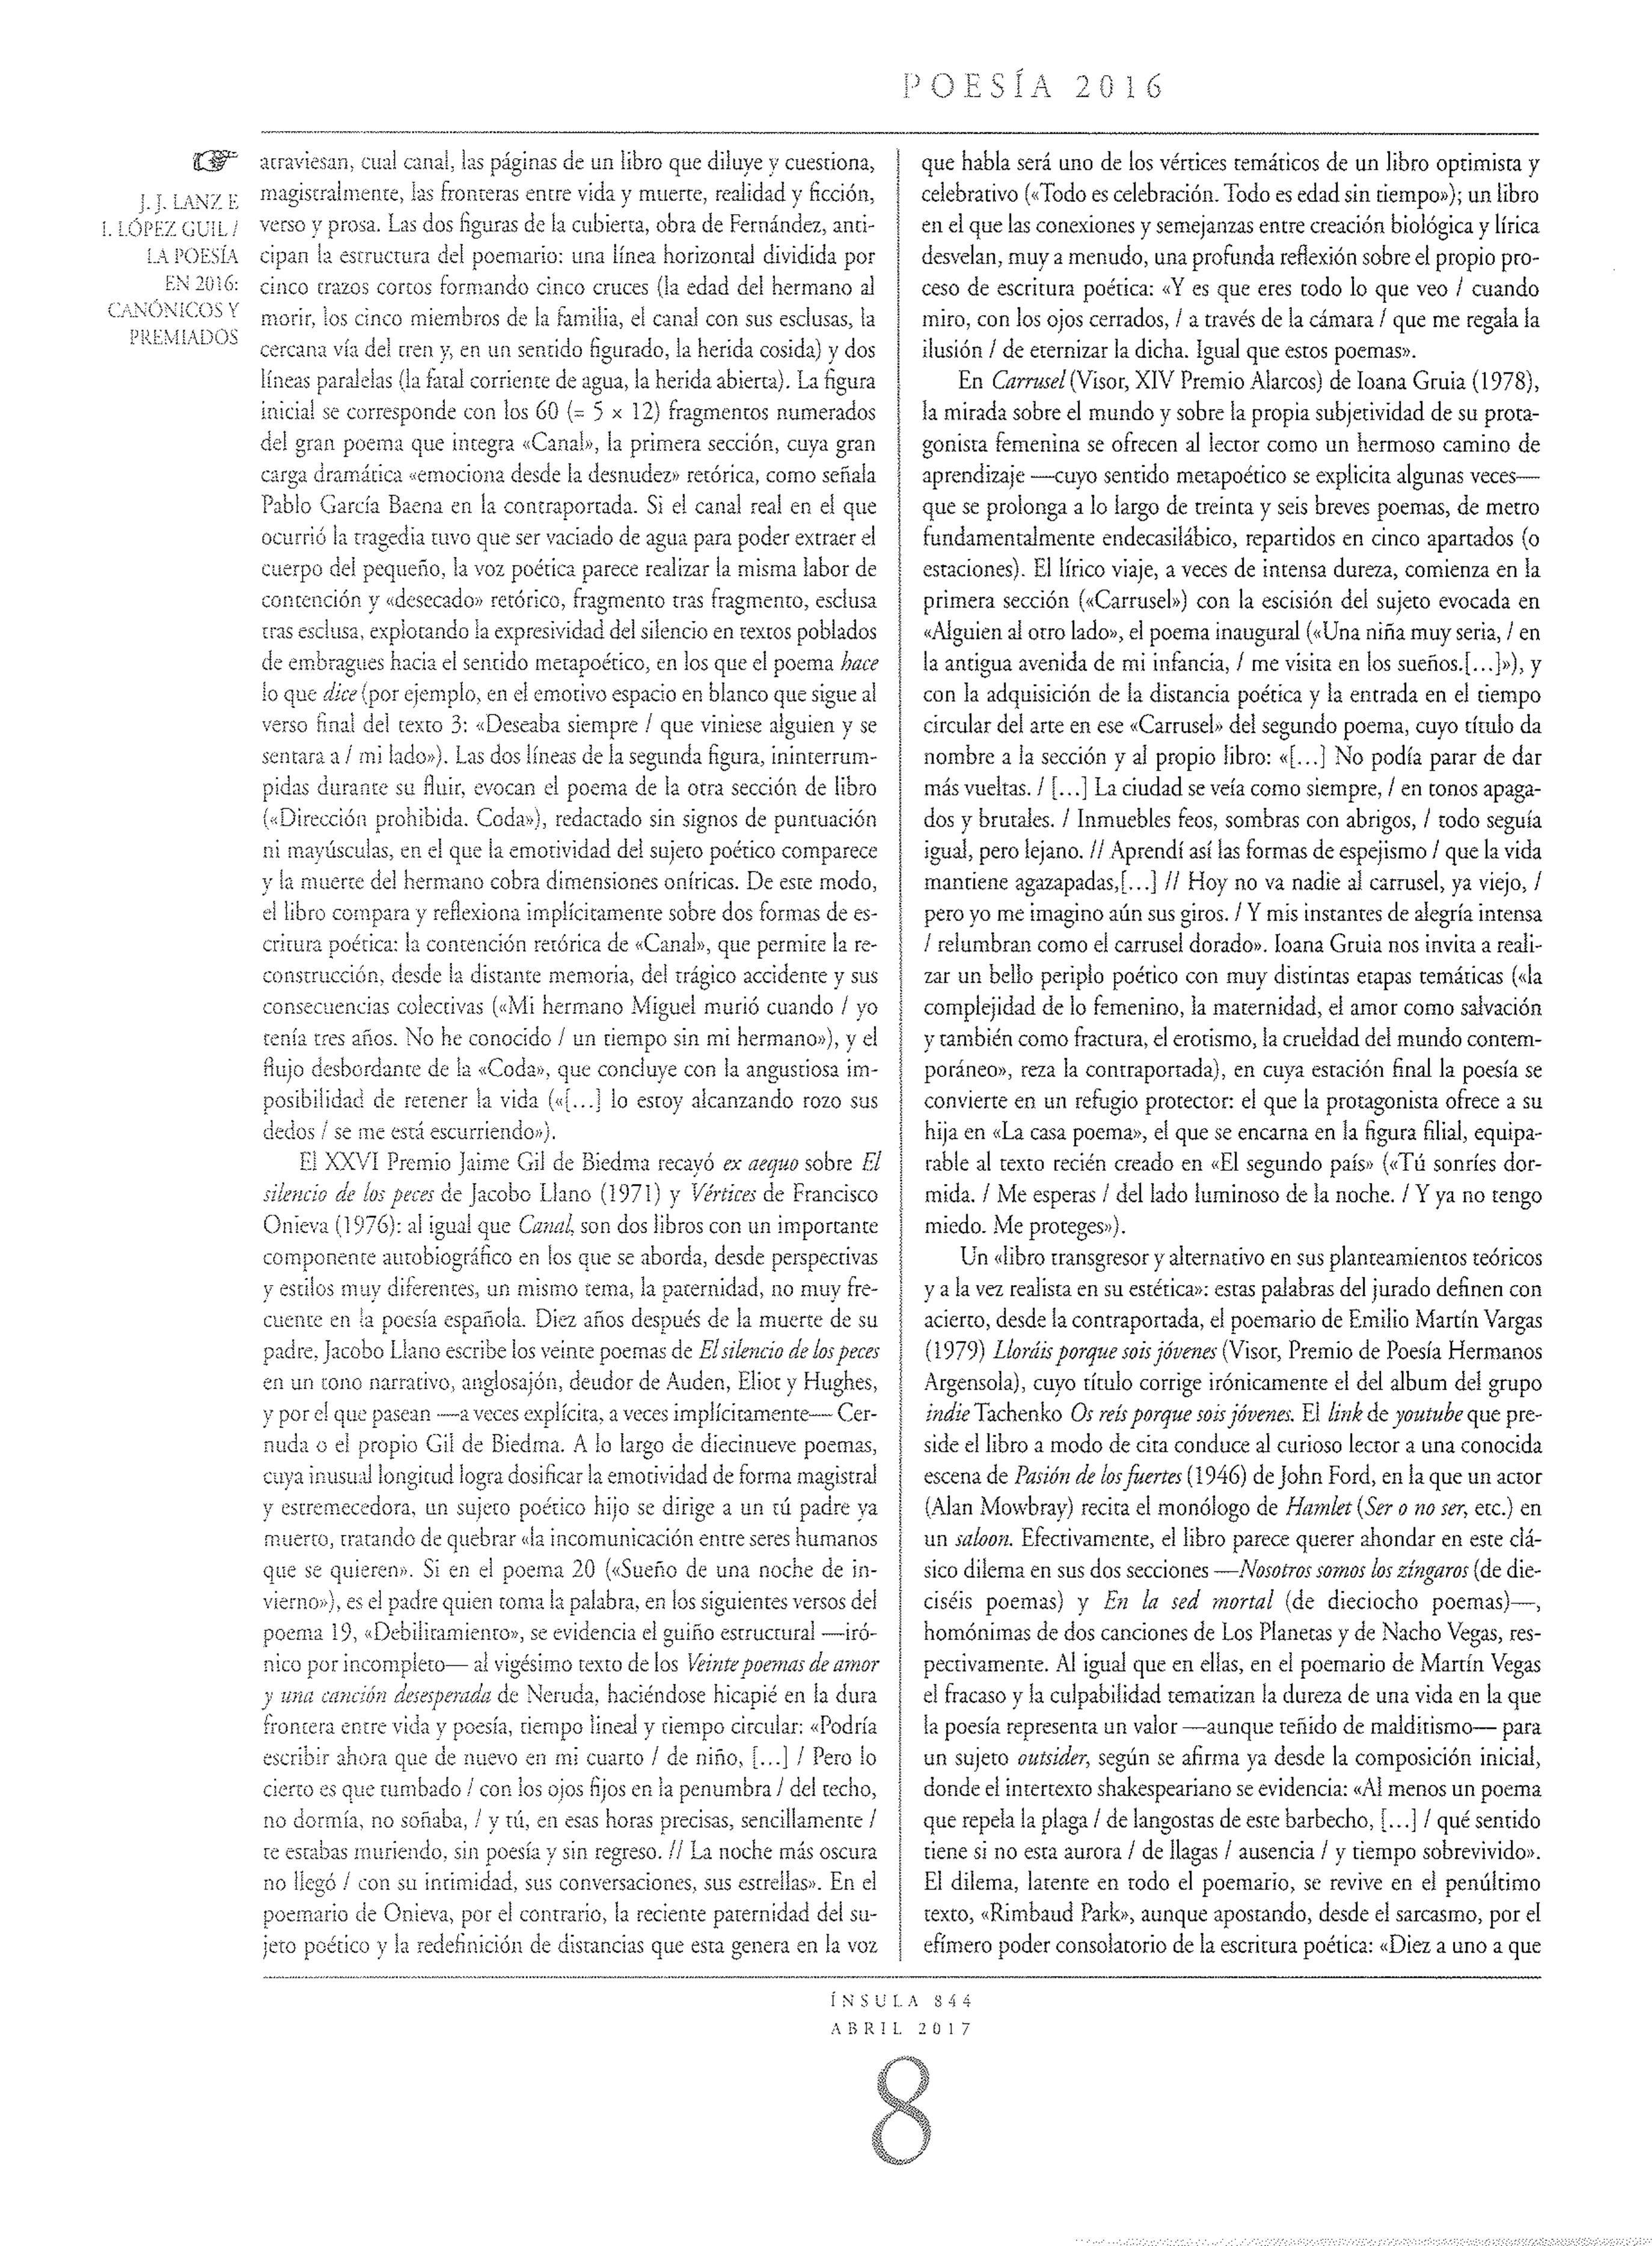 Juan José Lanz e Itziar López Gull sobre Carrusel en la revista Ínsula